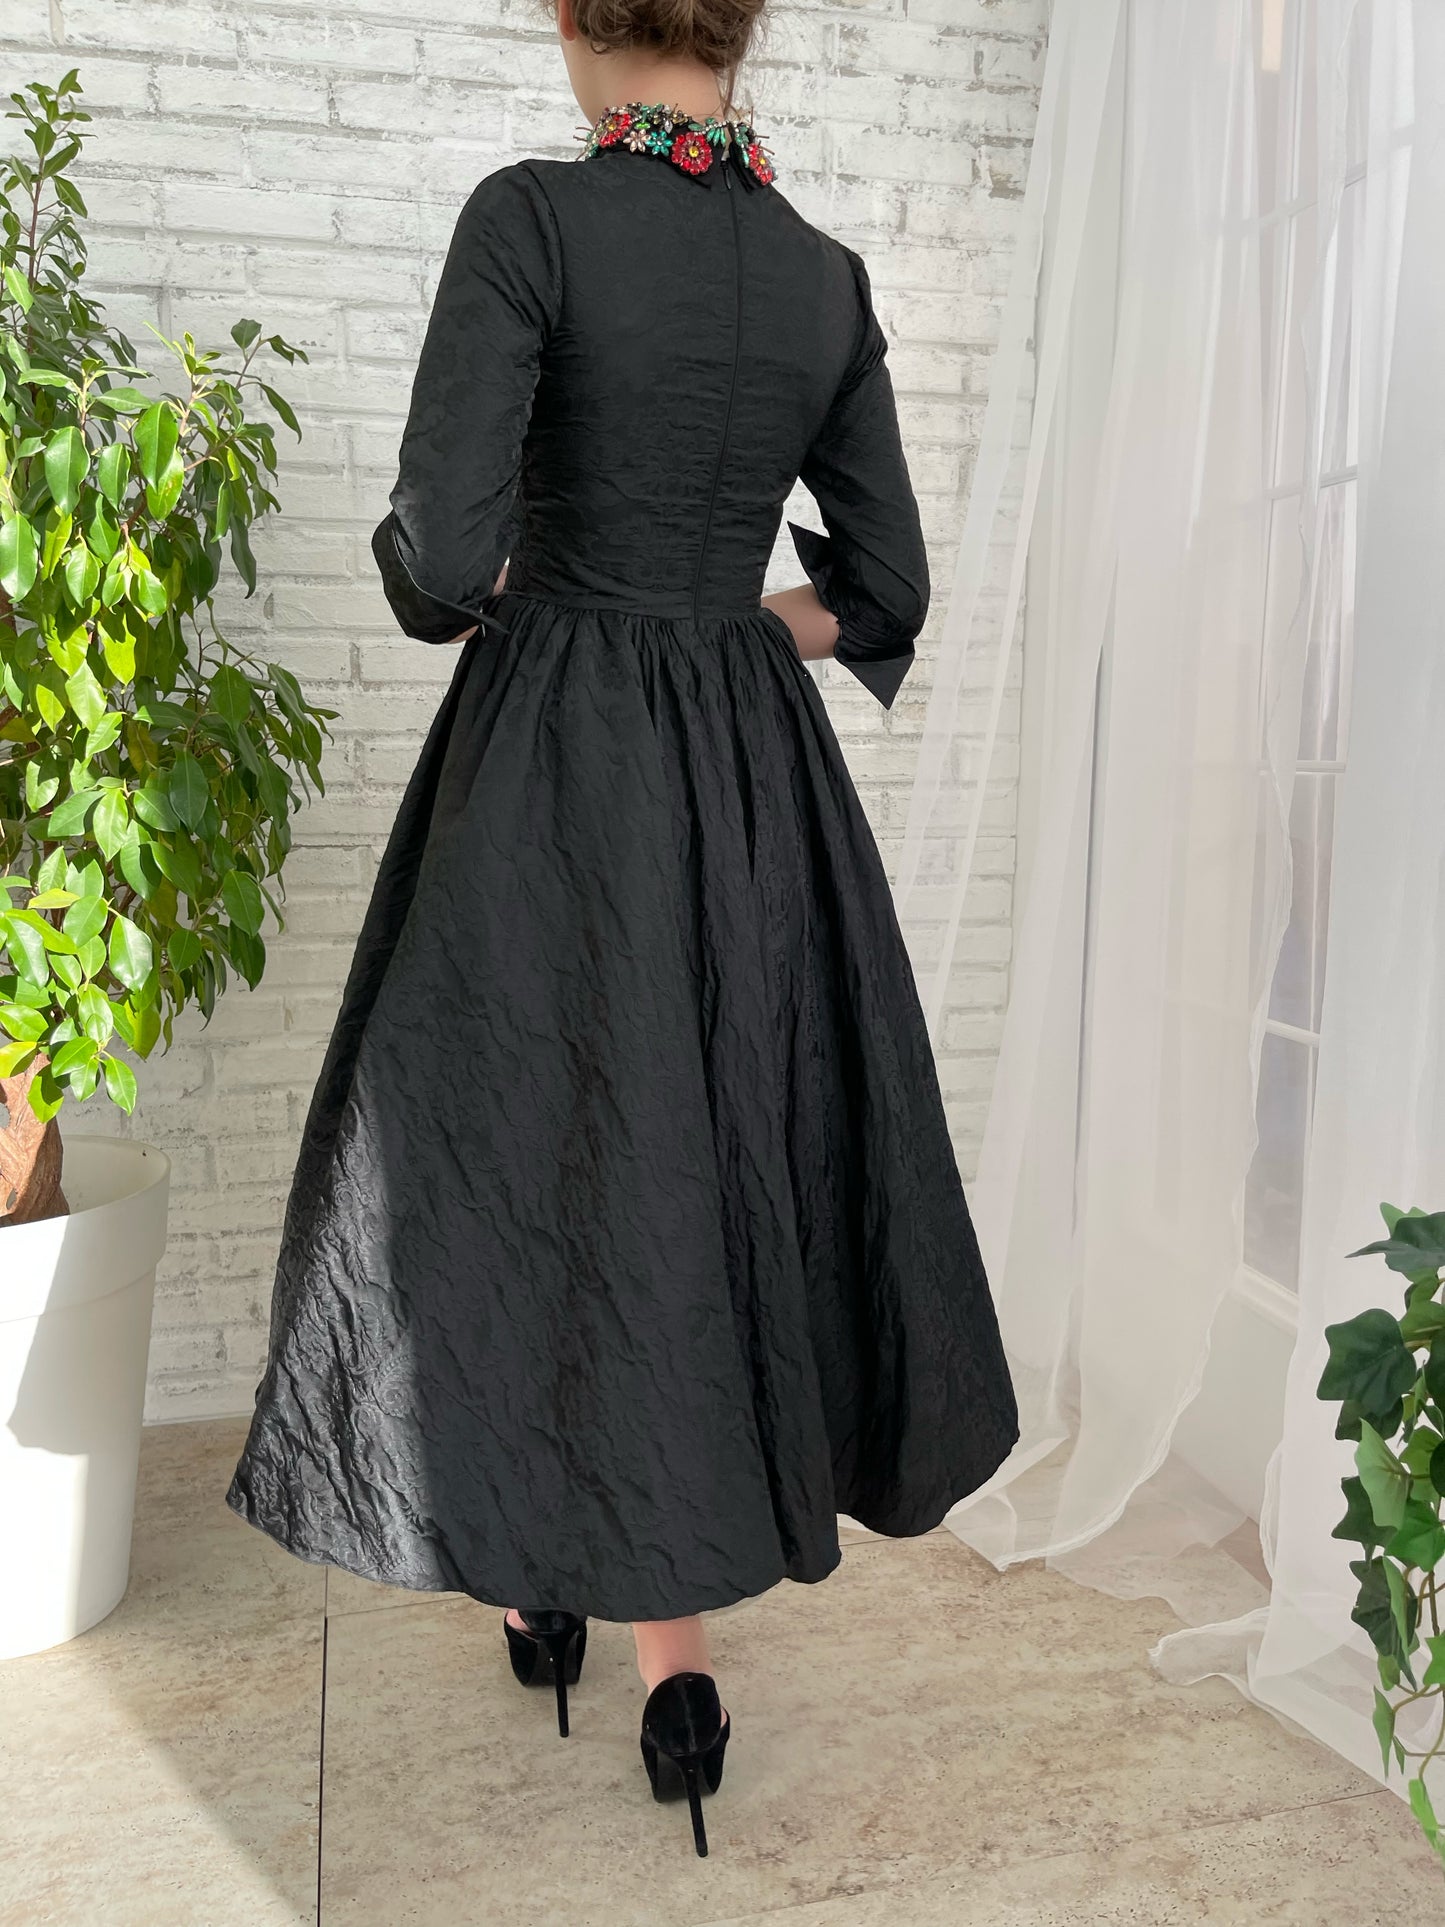 Black midi dress with short sleeves